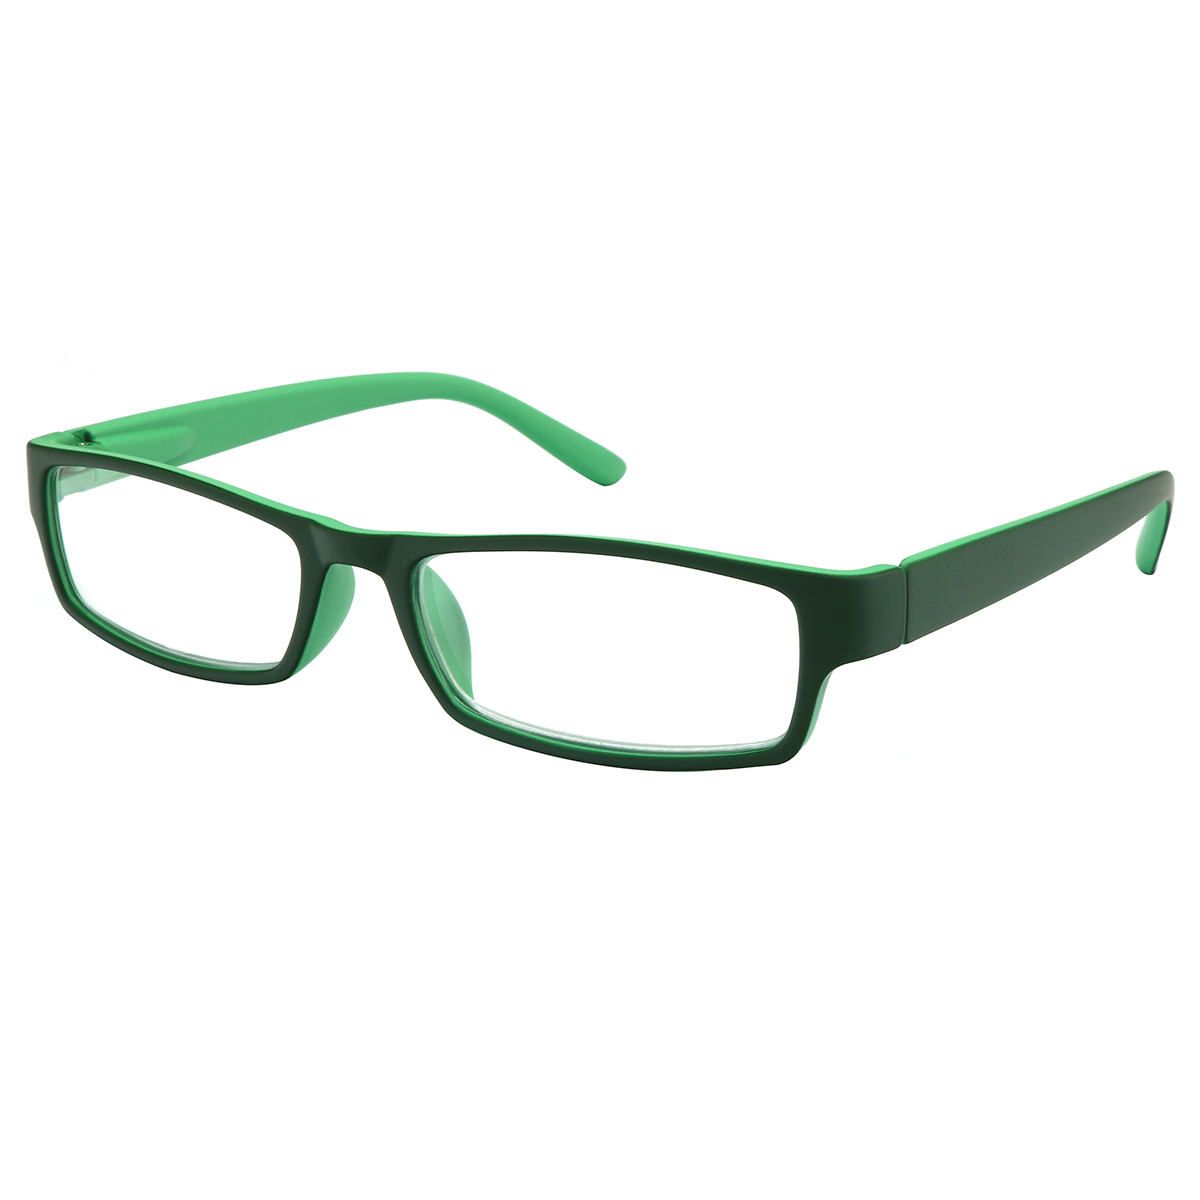 Diego - Rectangle Green Reading Glasses for Men